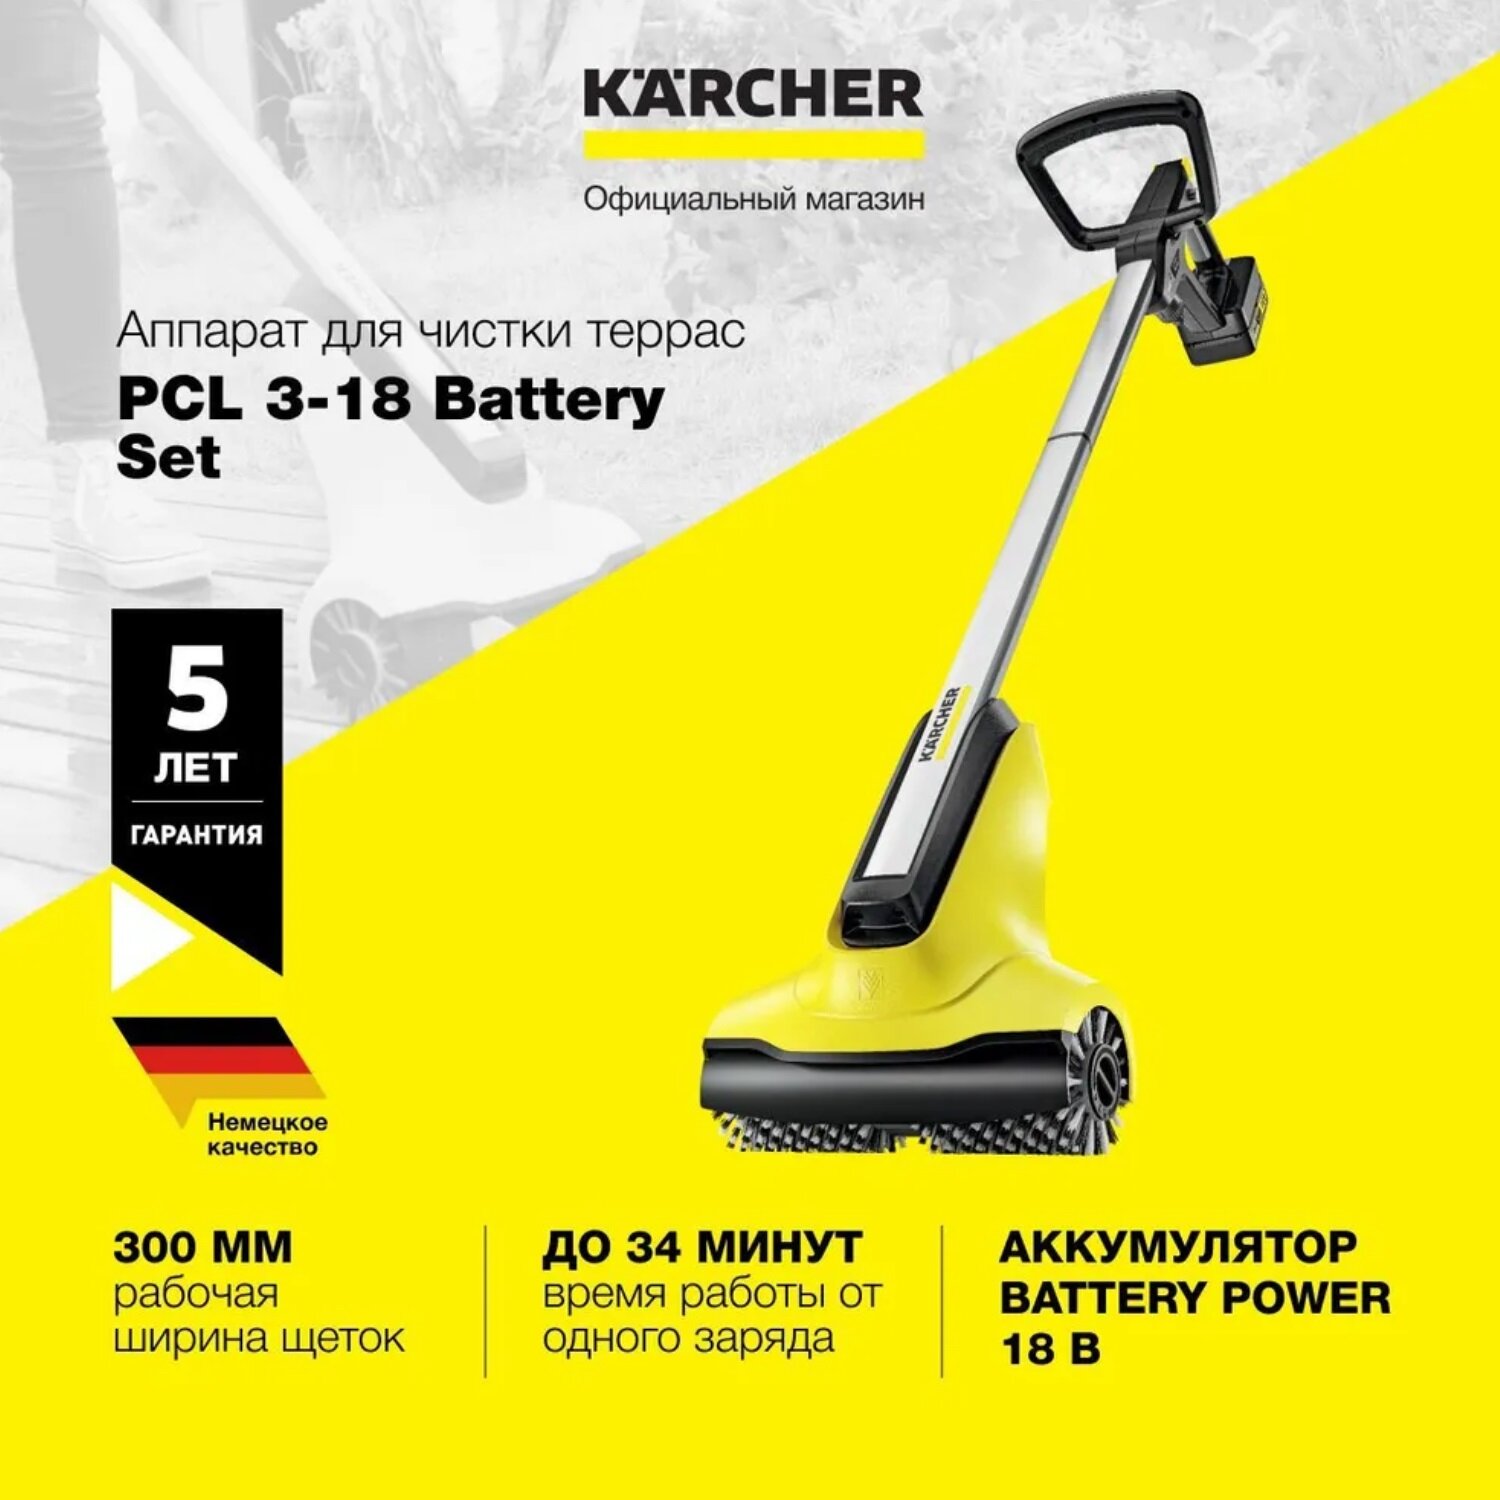 Аппарат для чистки террас Karcher PCL 3-18 BATTERY SET